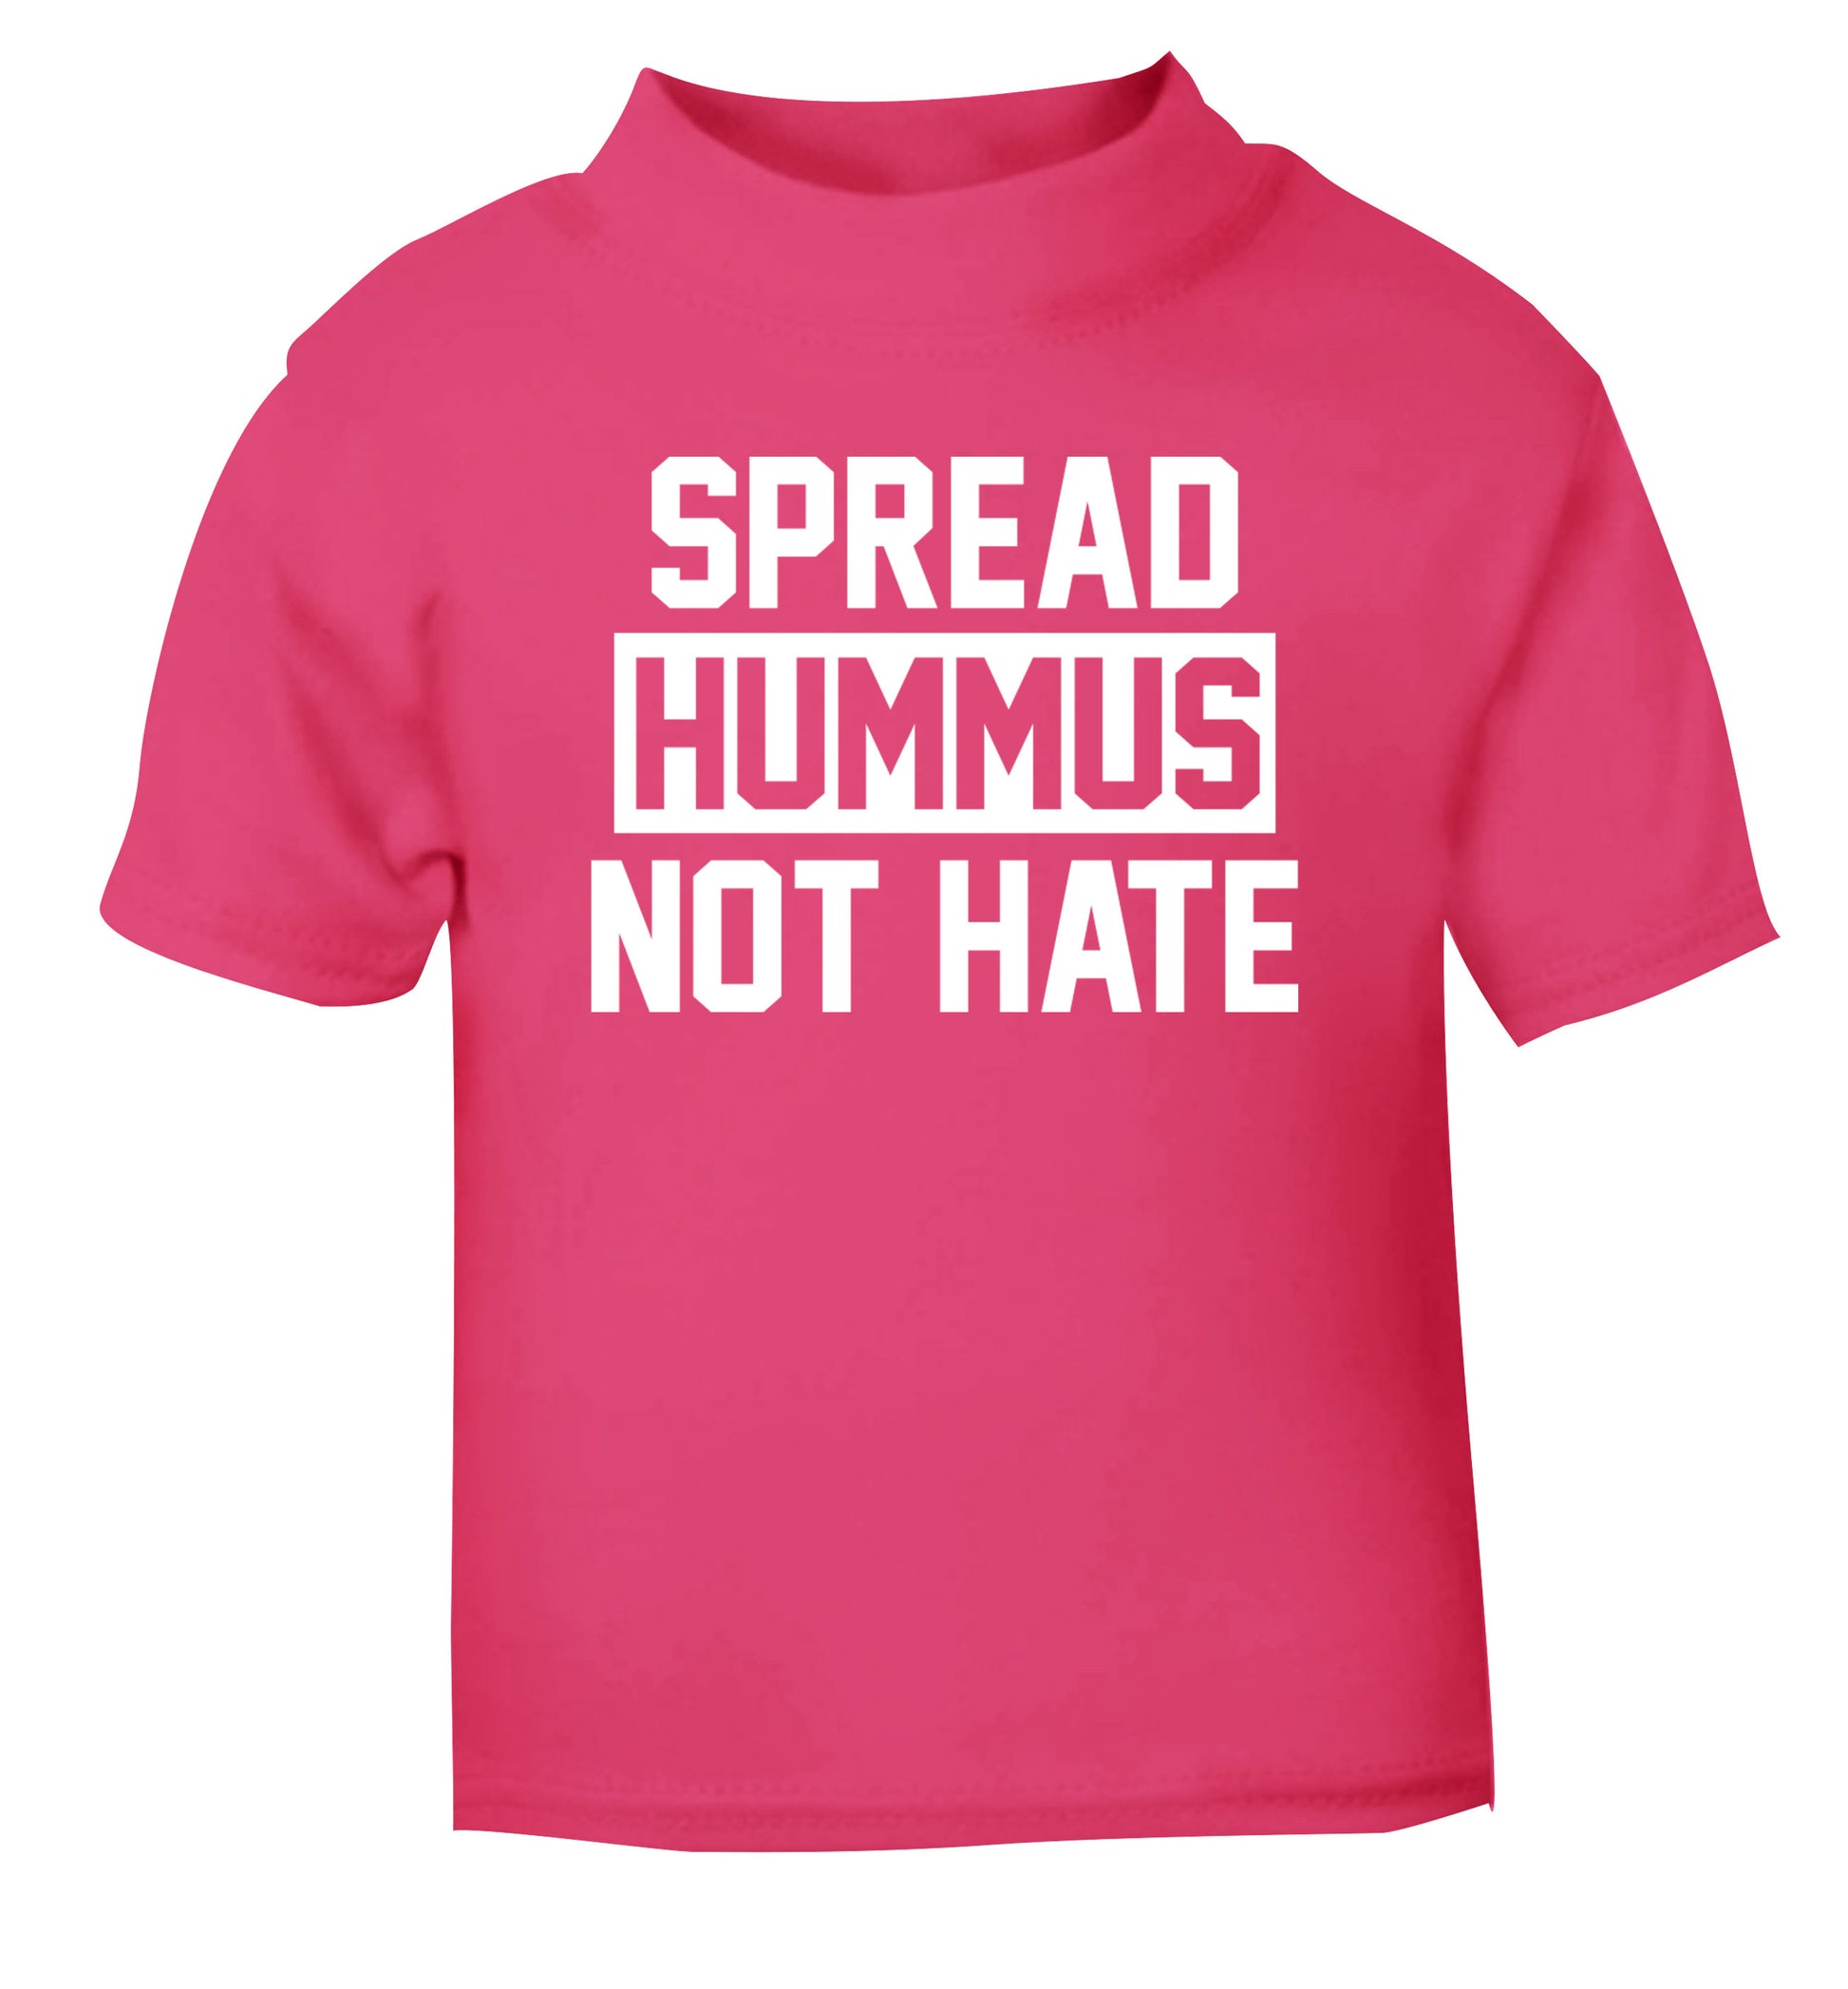 Spread hummus not hate pink Baby Toddler Tshirt 2 Years